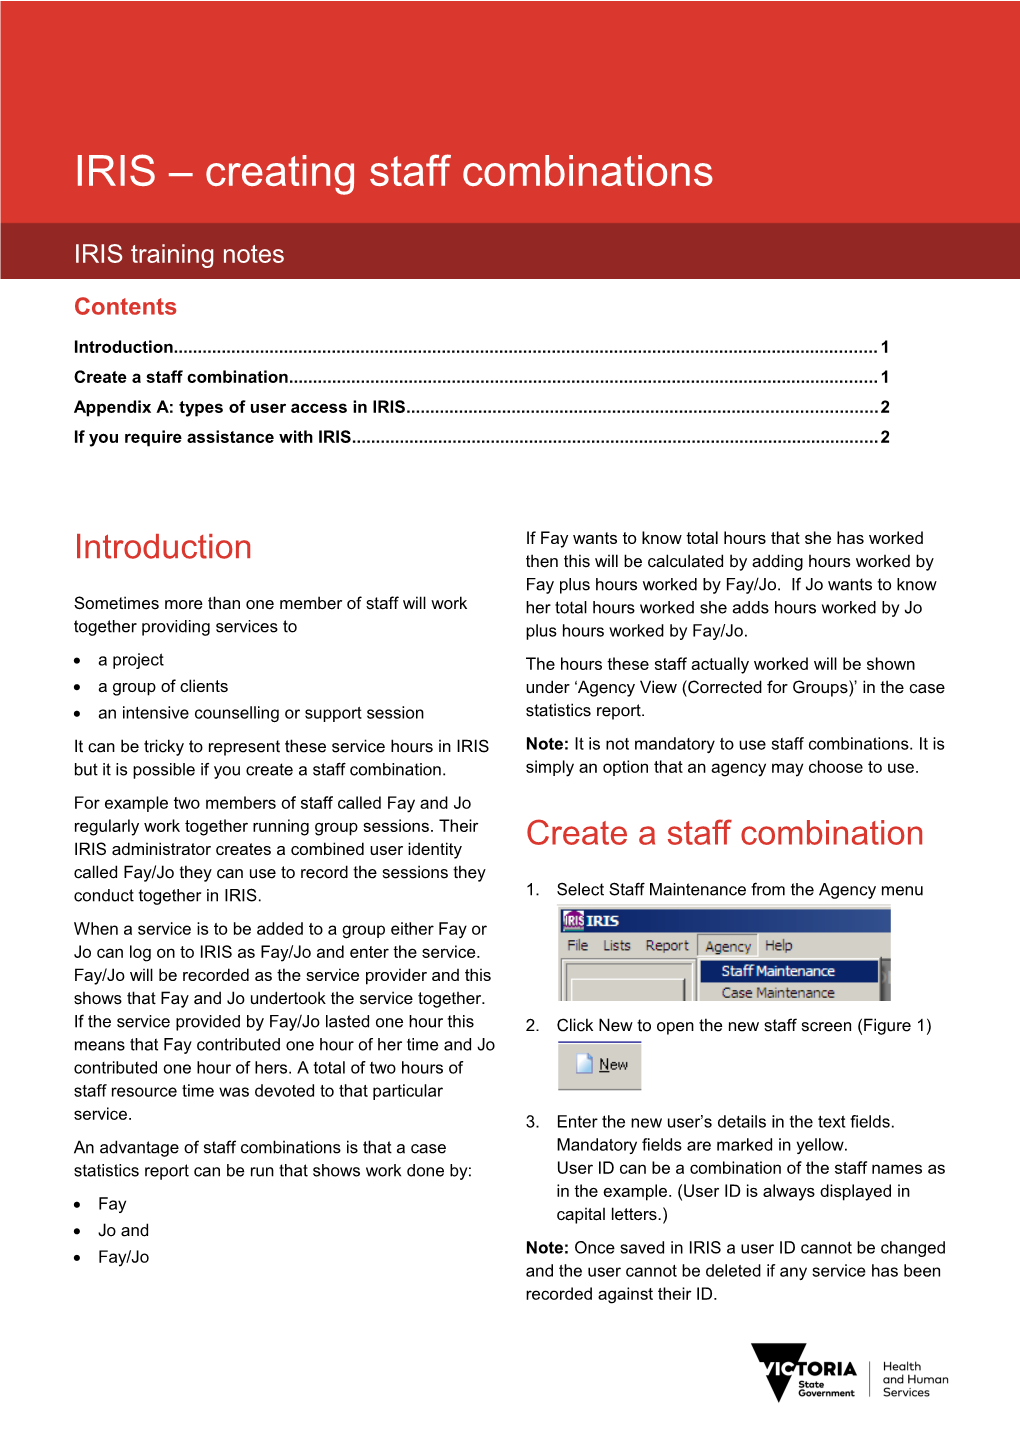 IRIS Training Notes - Creating Staff Combinations